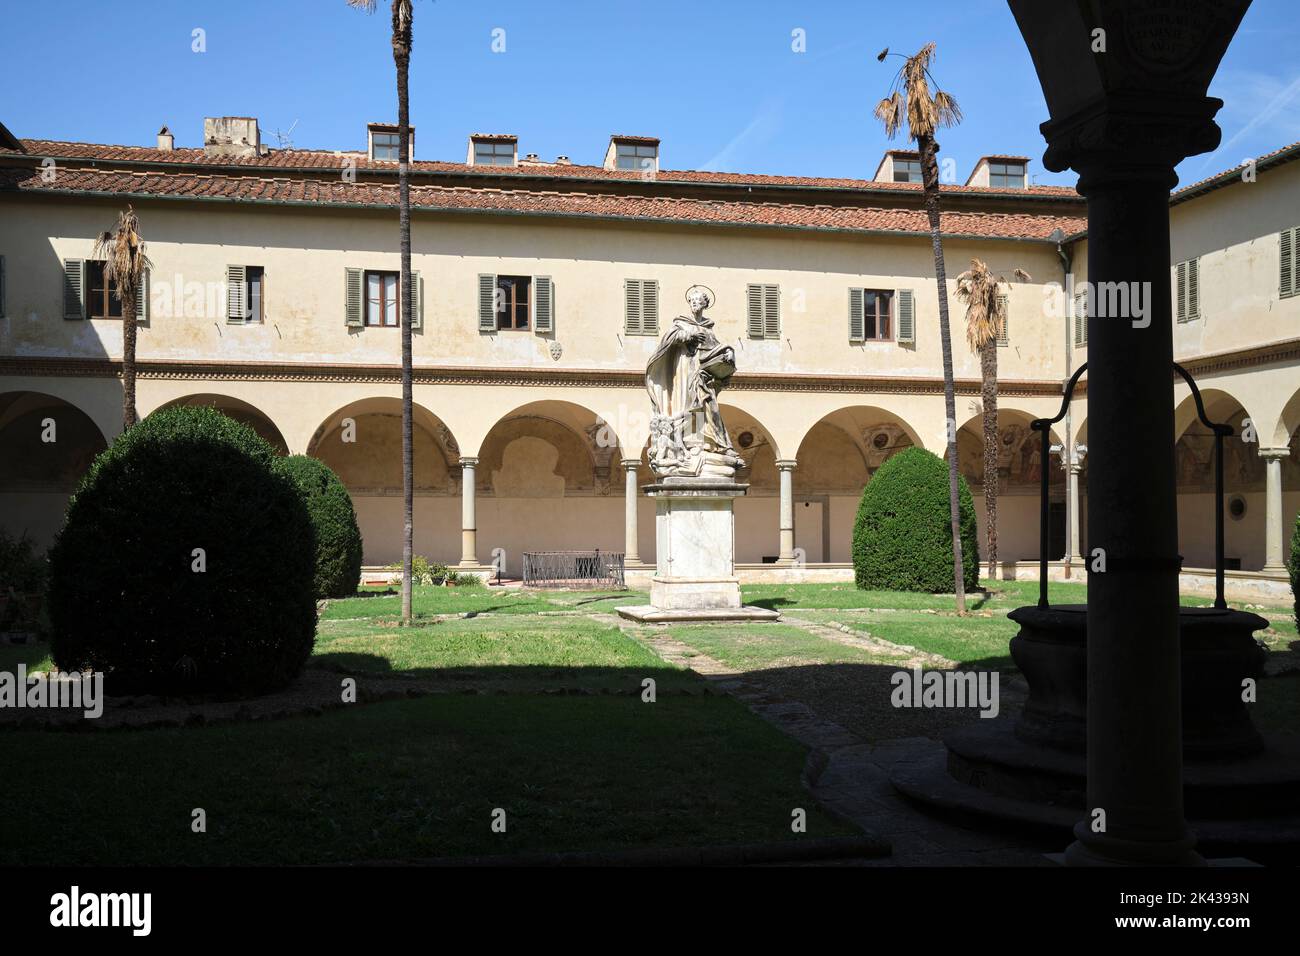 Basilica della Santissima Annunziata (Basilica of the Most Holy Annunciation) Florence Italy Stock Photo